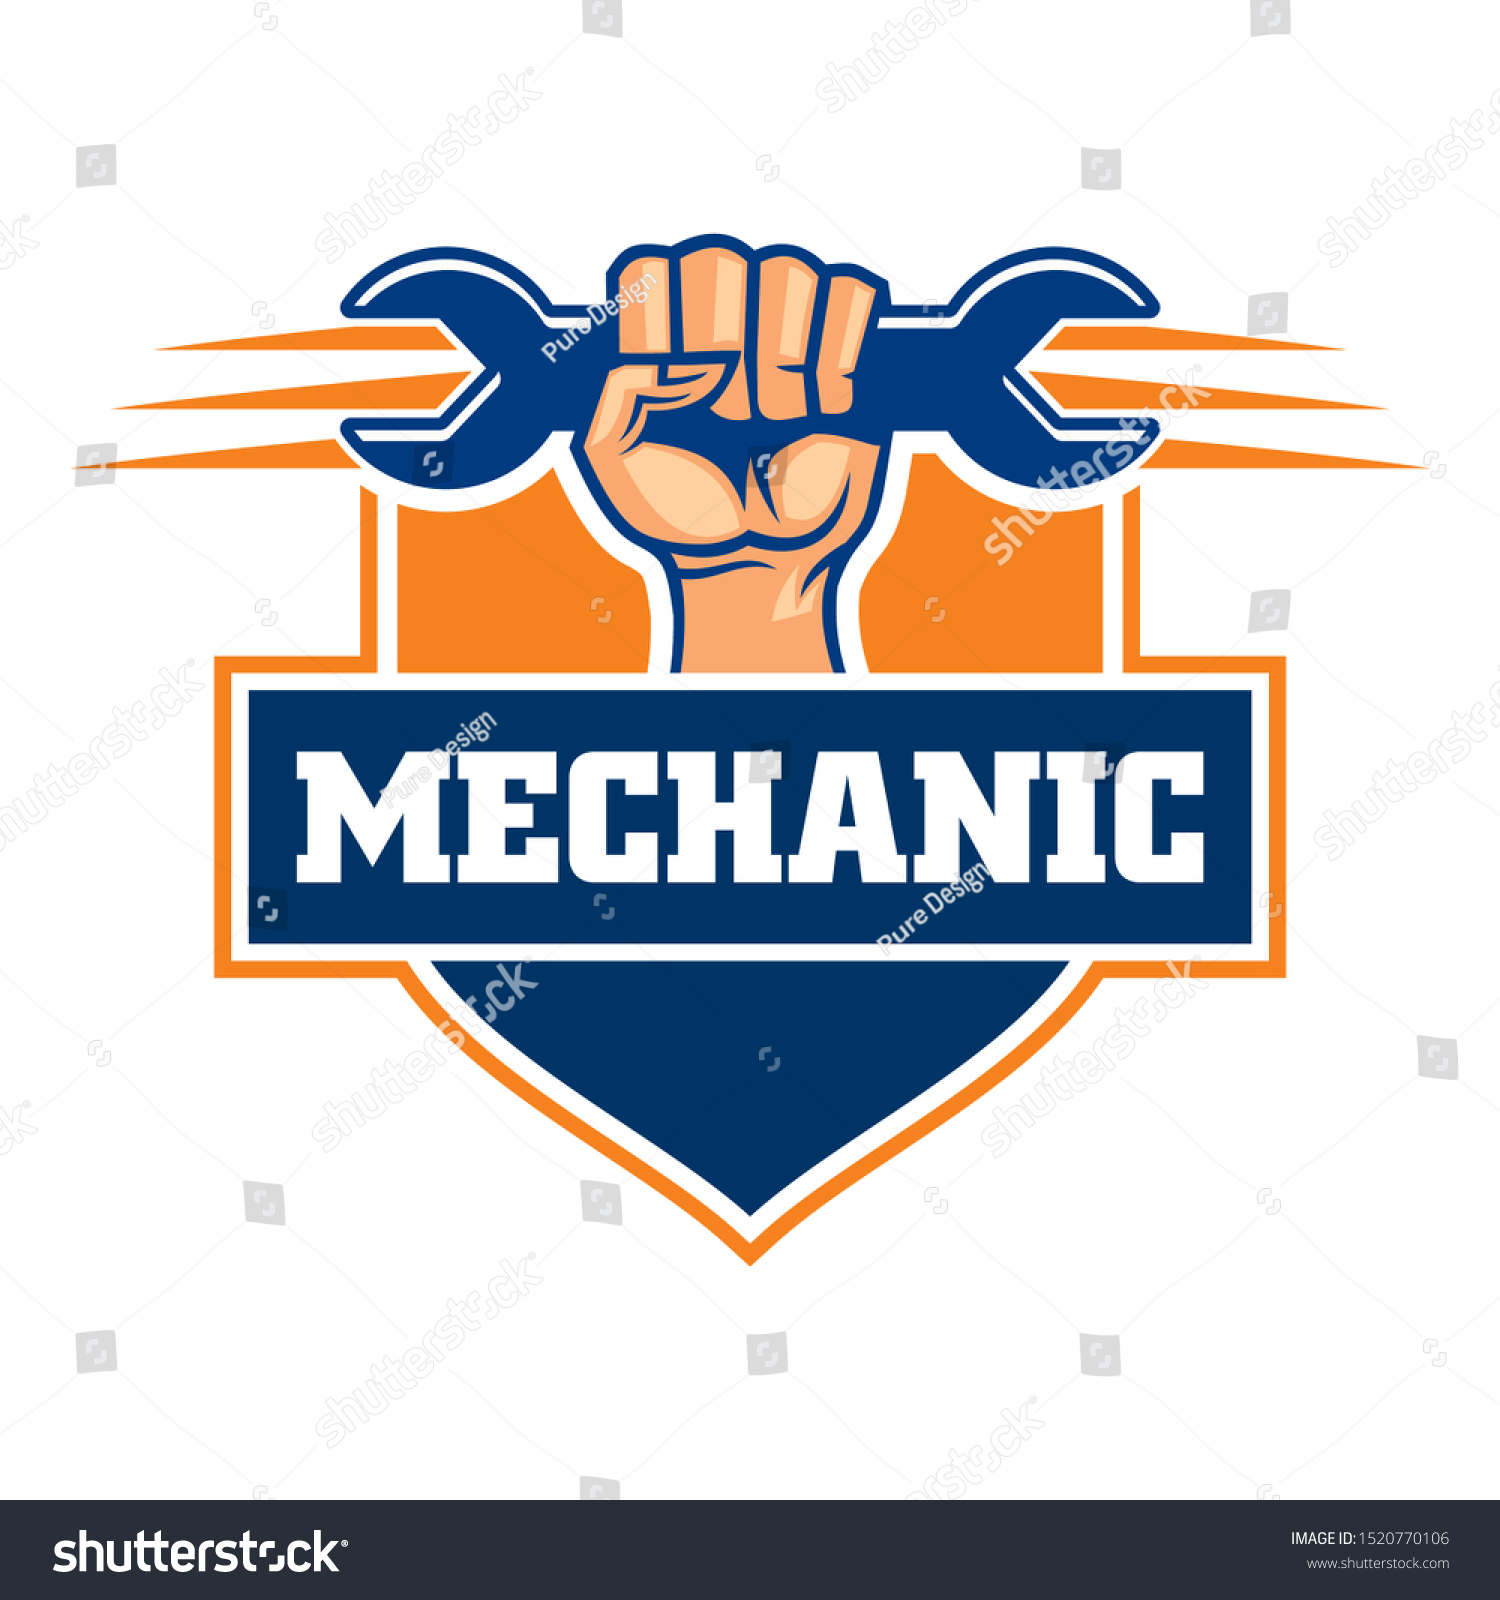 mechanic logo vector